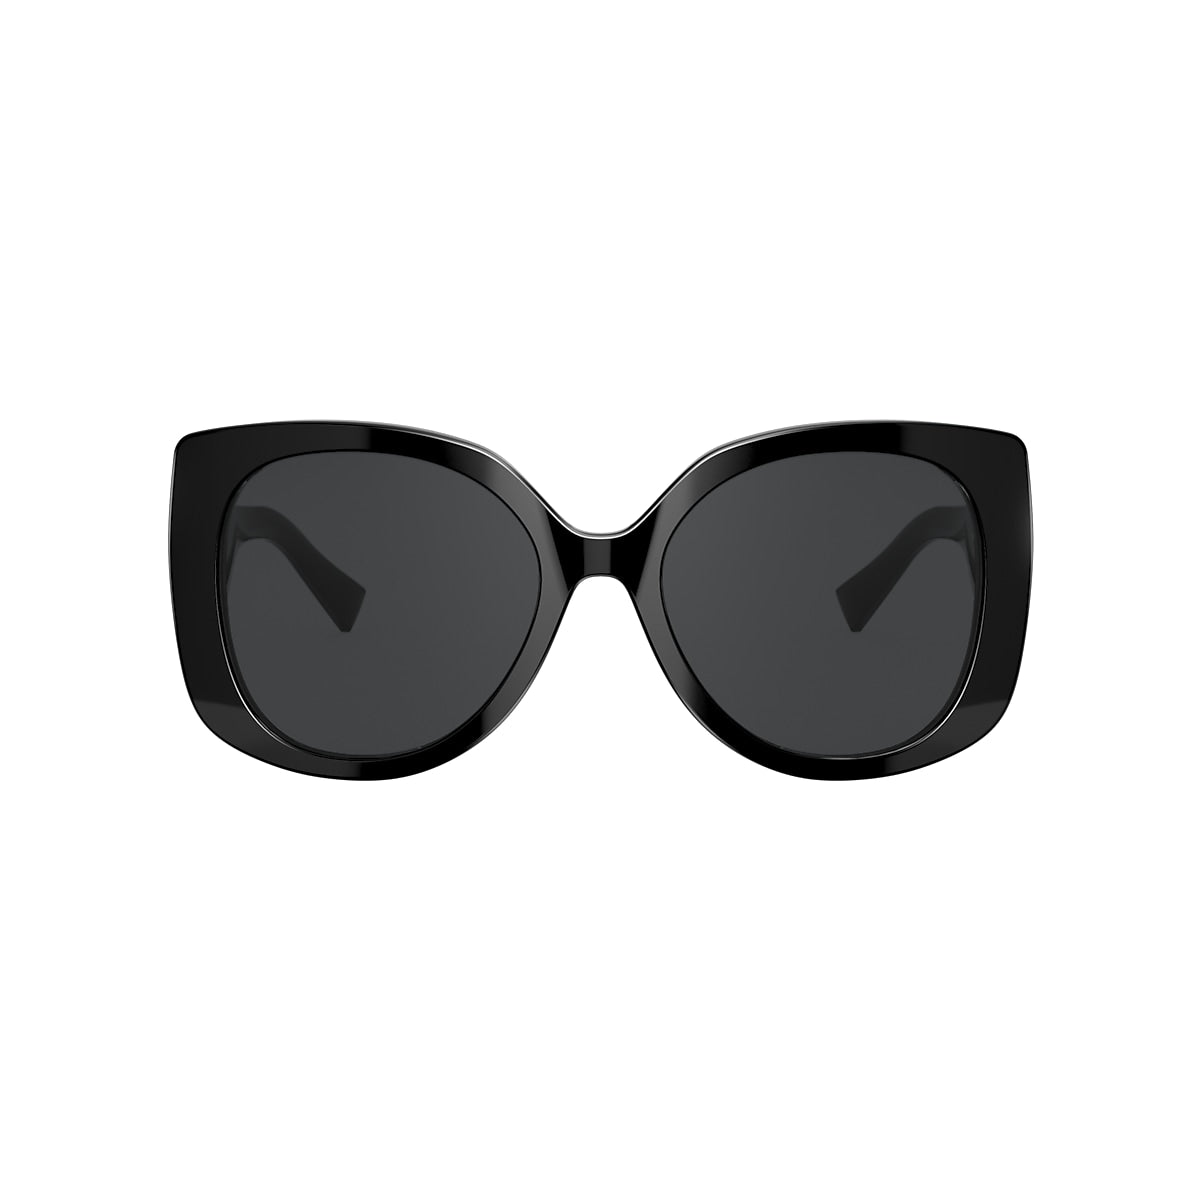 VERSACE VE4387 Black - Women Luxury Sunglasses, Dark Grey Lens